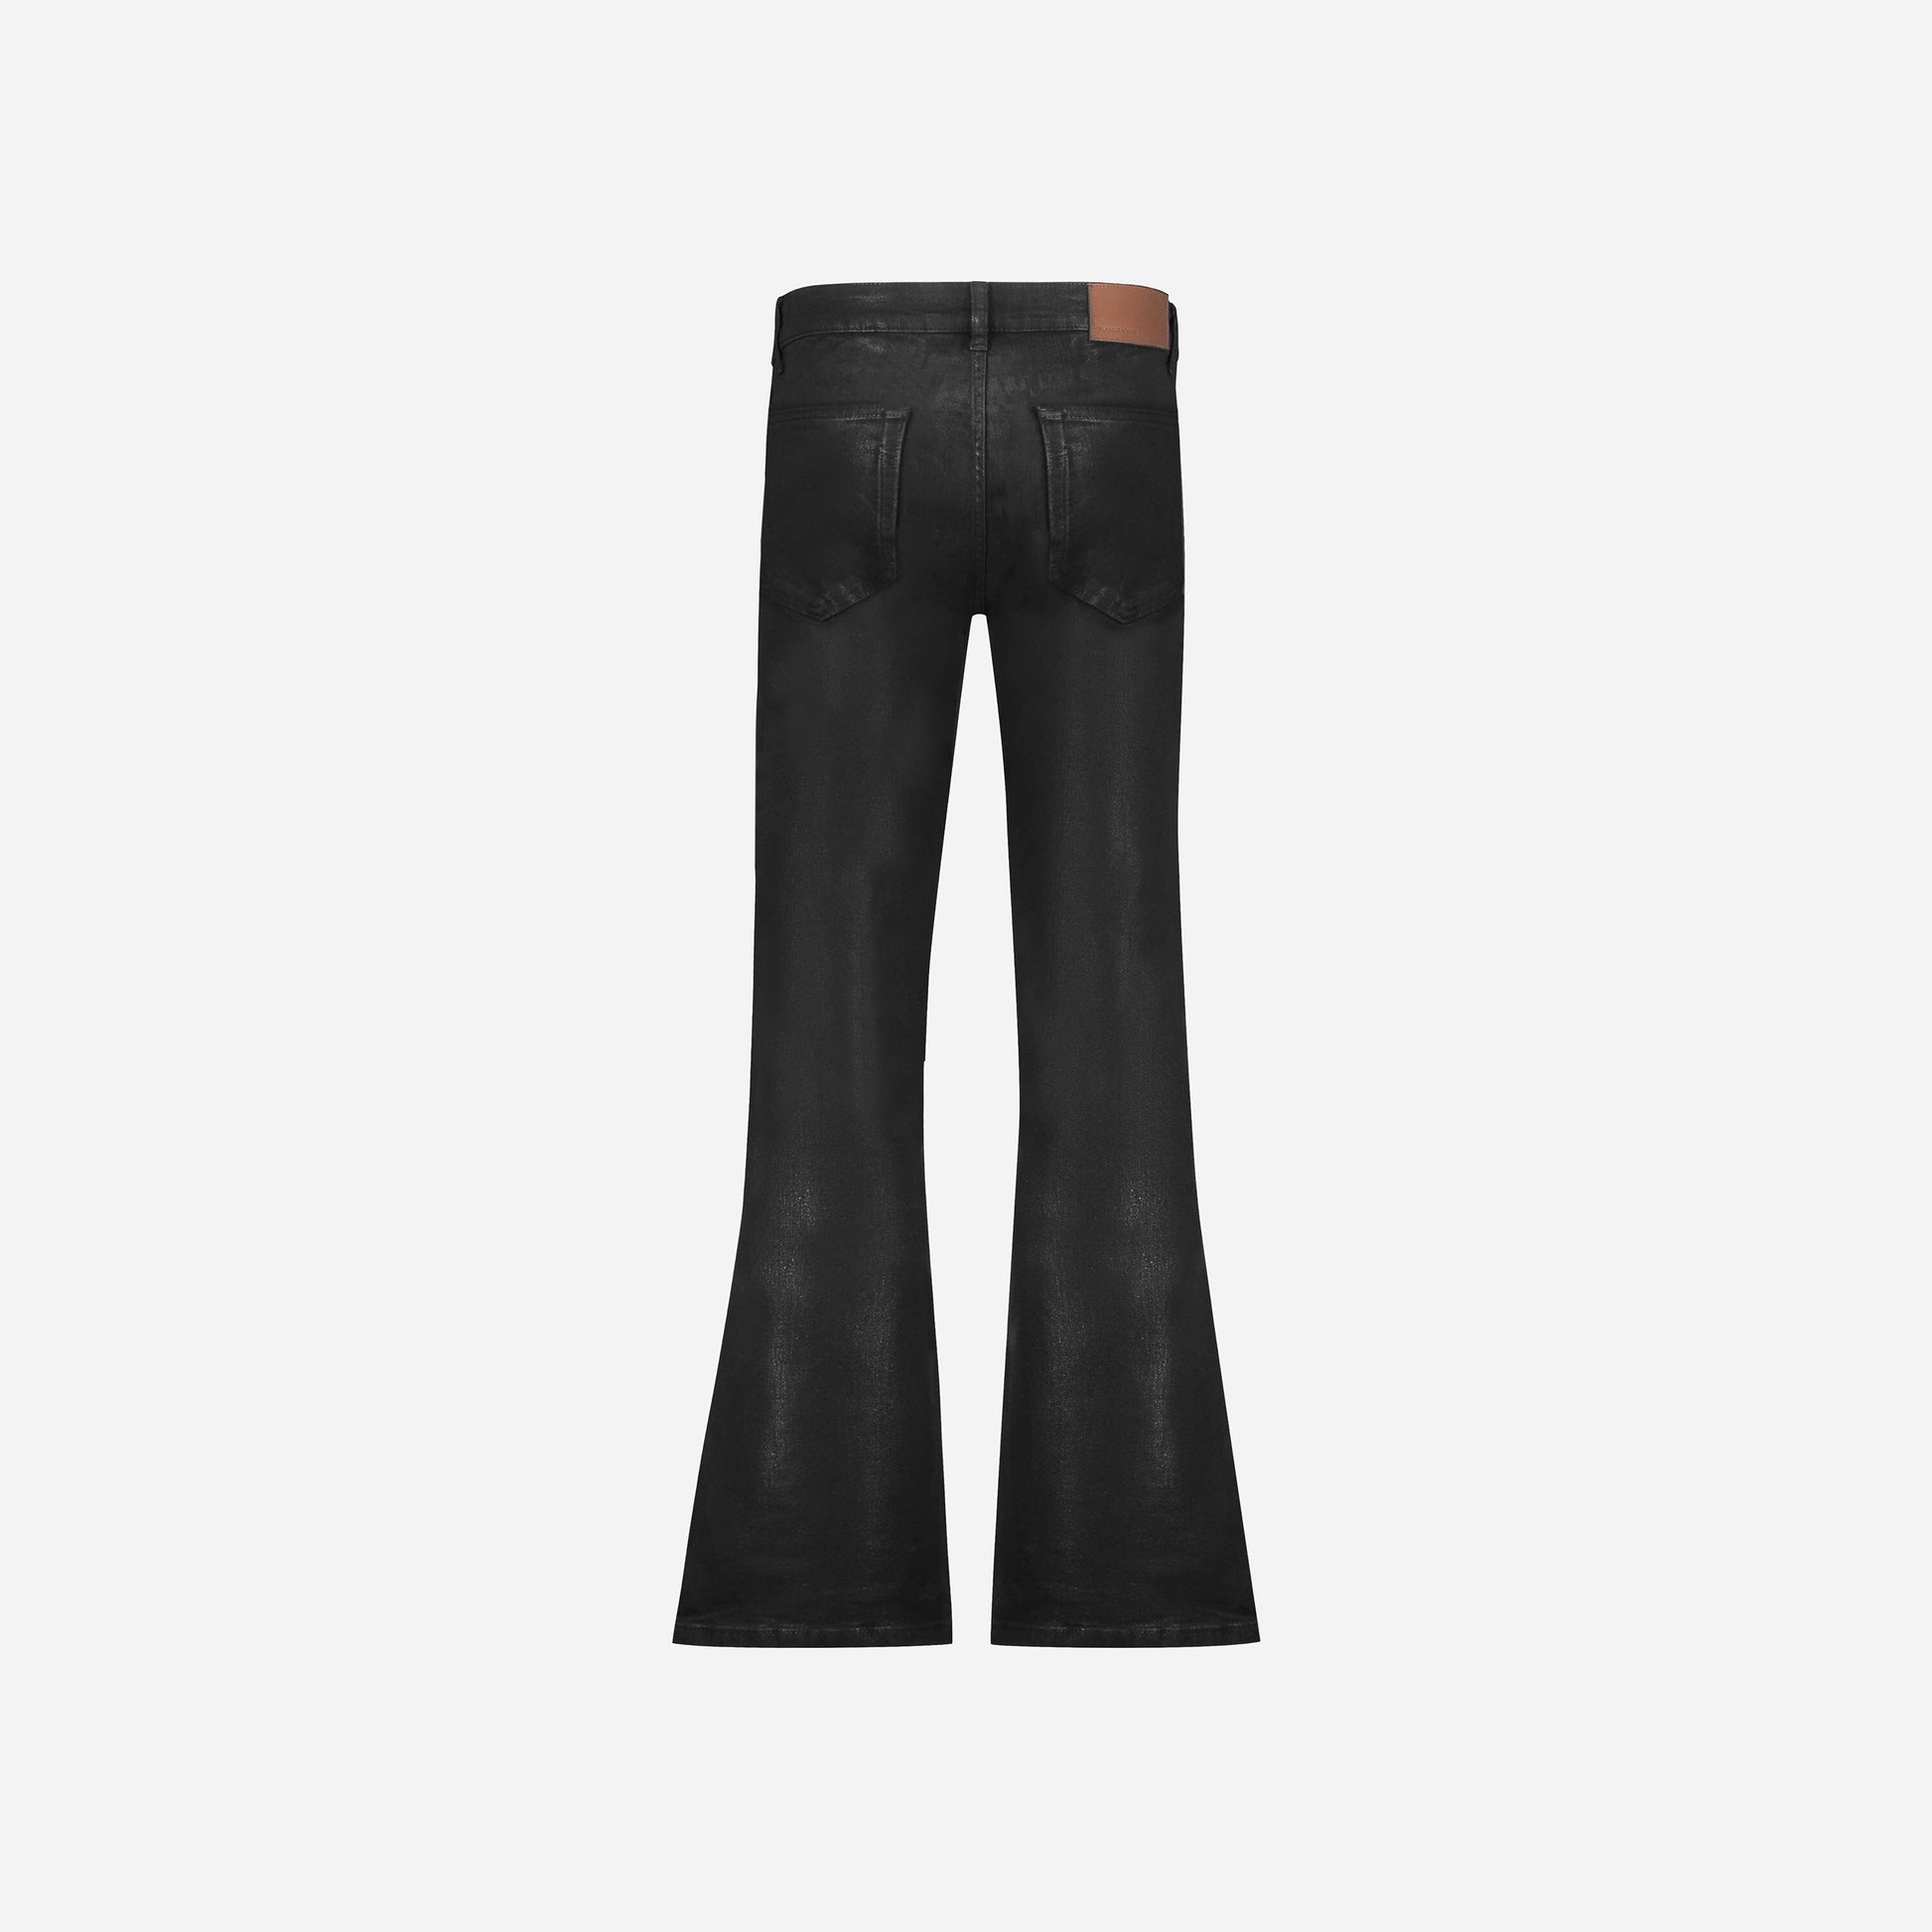 Carpenter Flared Jeans in Waxed Black Denim